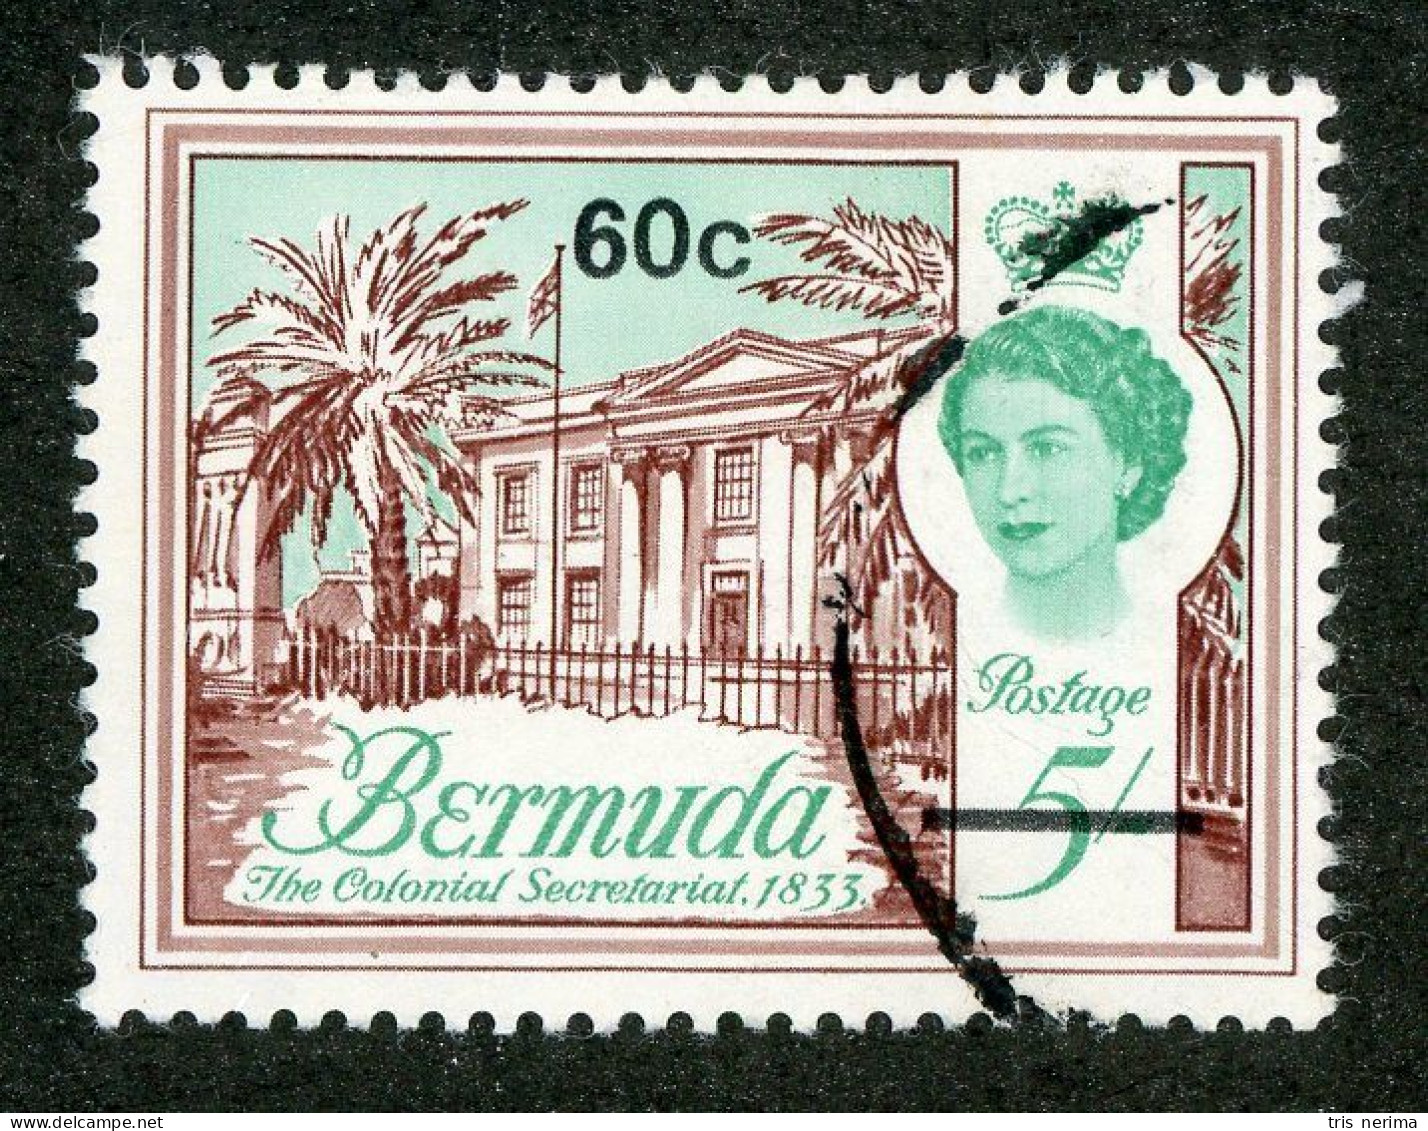 4763 BCx Bermuda 1970 Scott 252 Used (Lower Bids 20% Off) - Bermuda